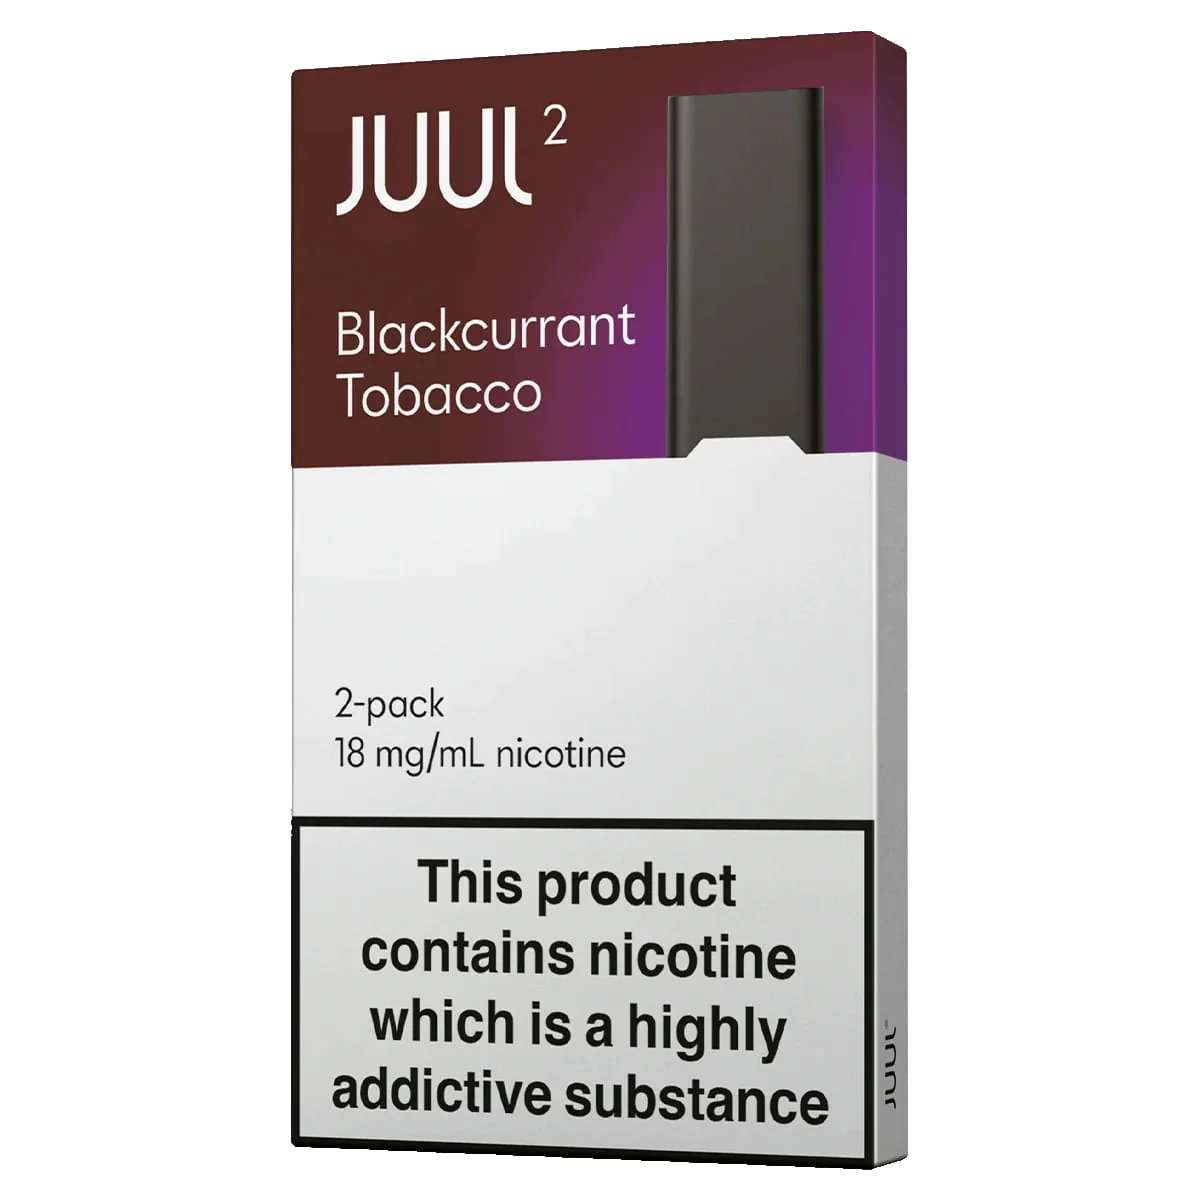 juul2-blackcurrant-tobacco_1024x1024@2x-1